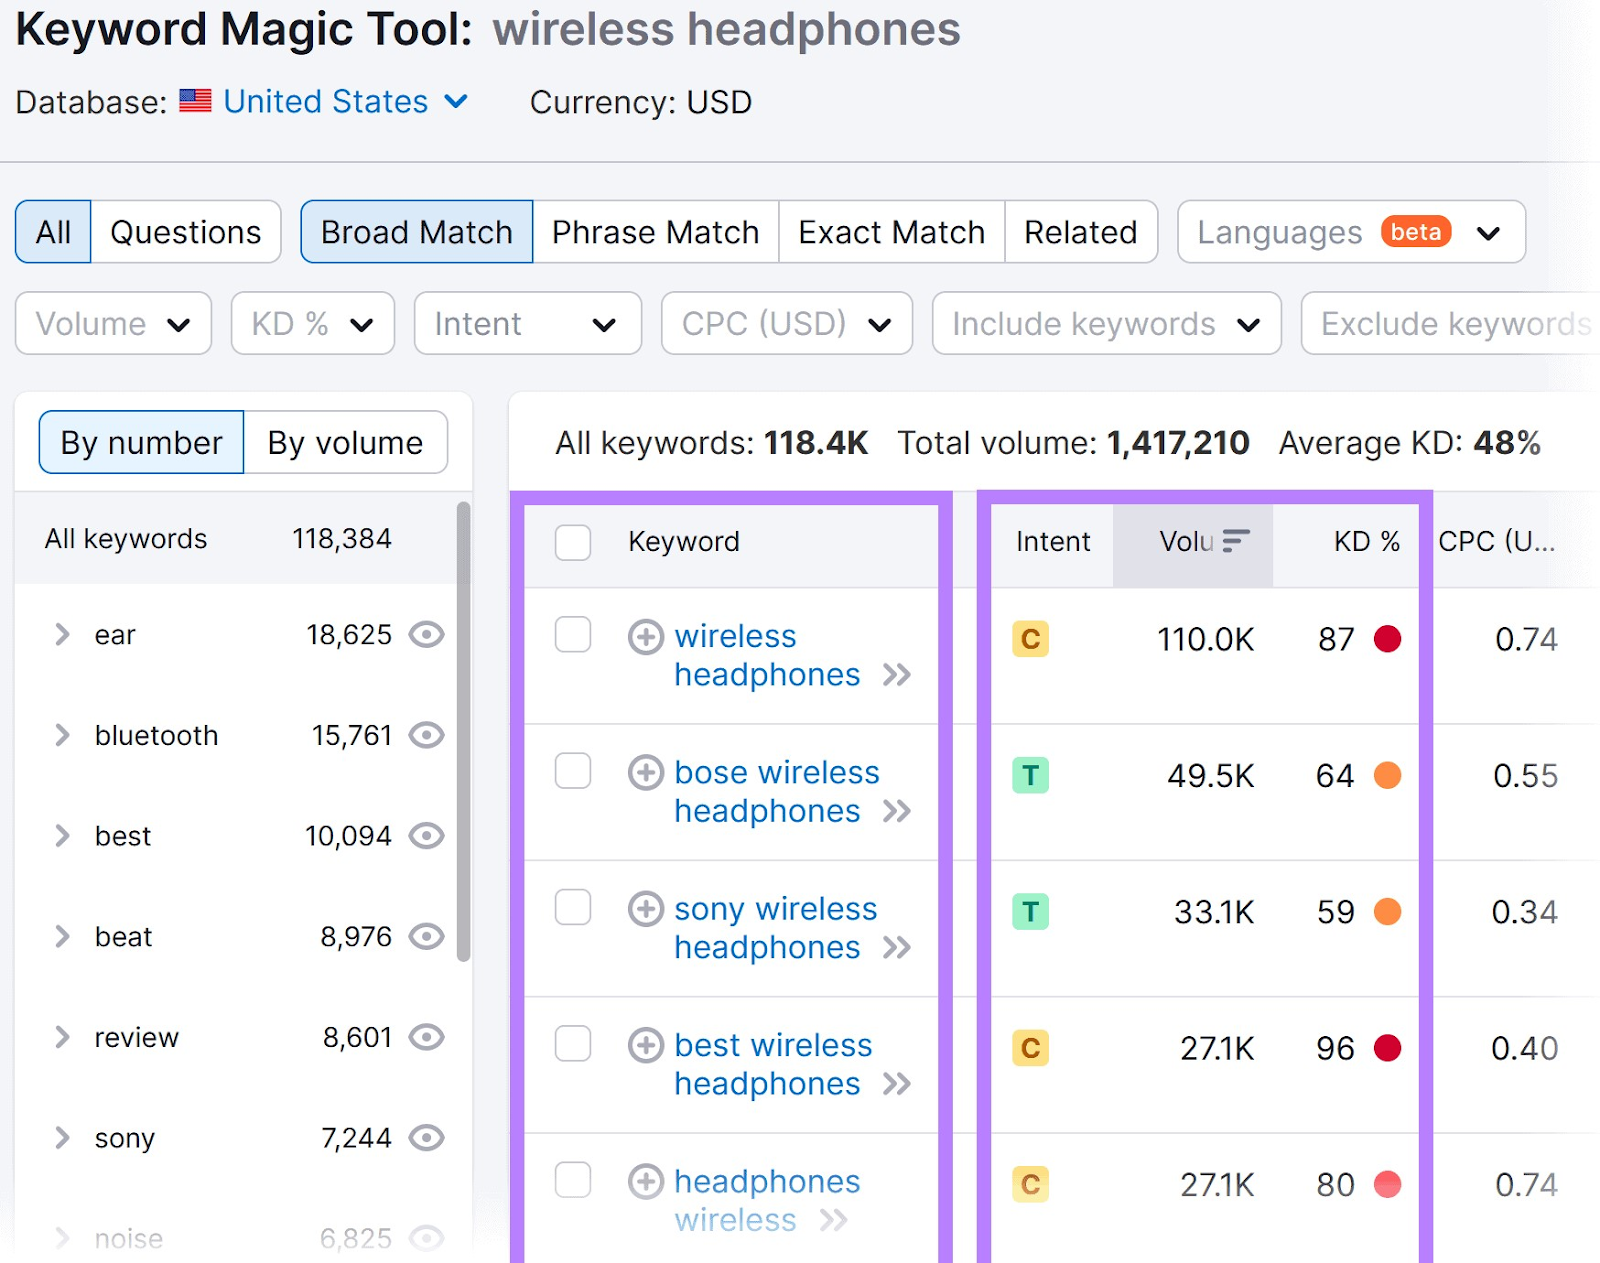 Keyword Magic Tool "broad match" list of ideas for "wireless headphones"